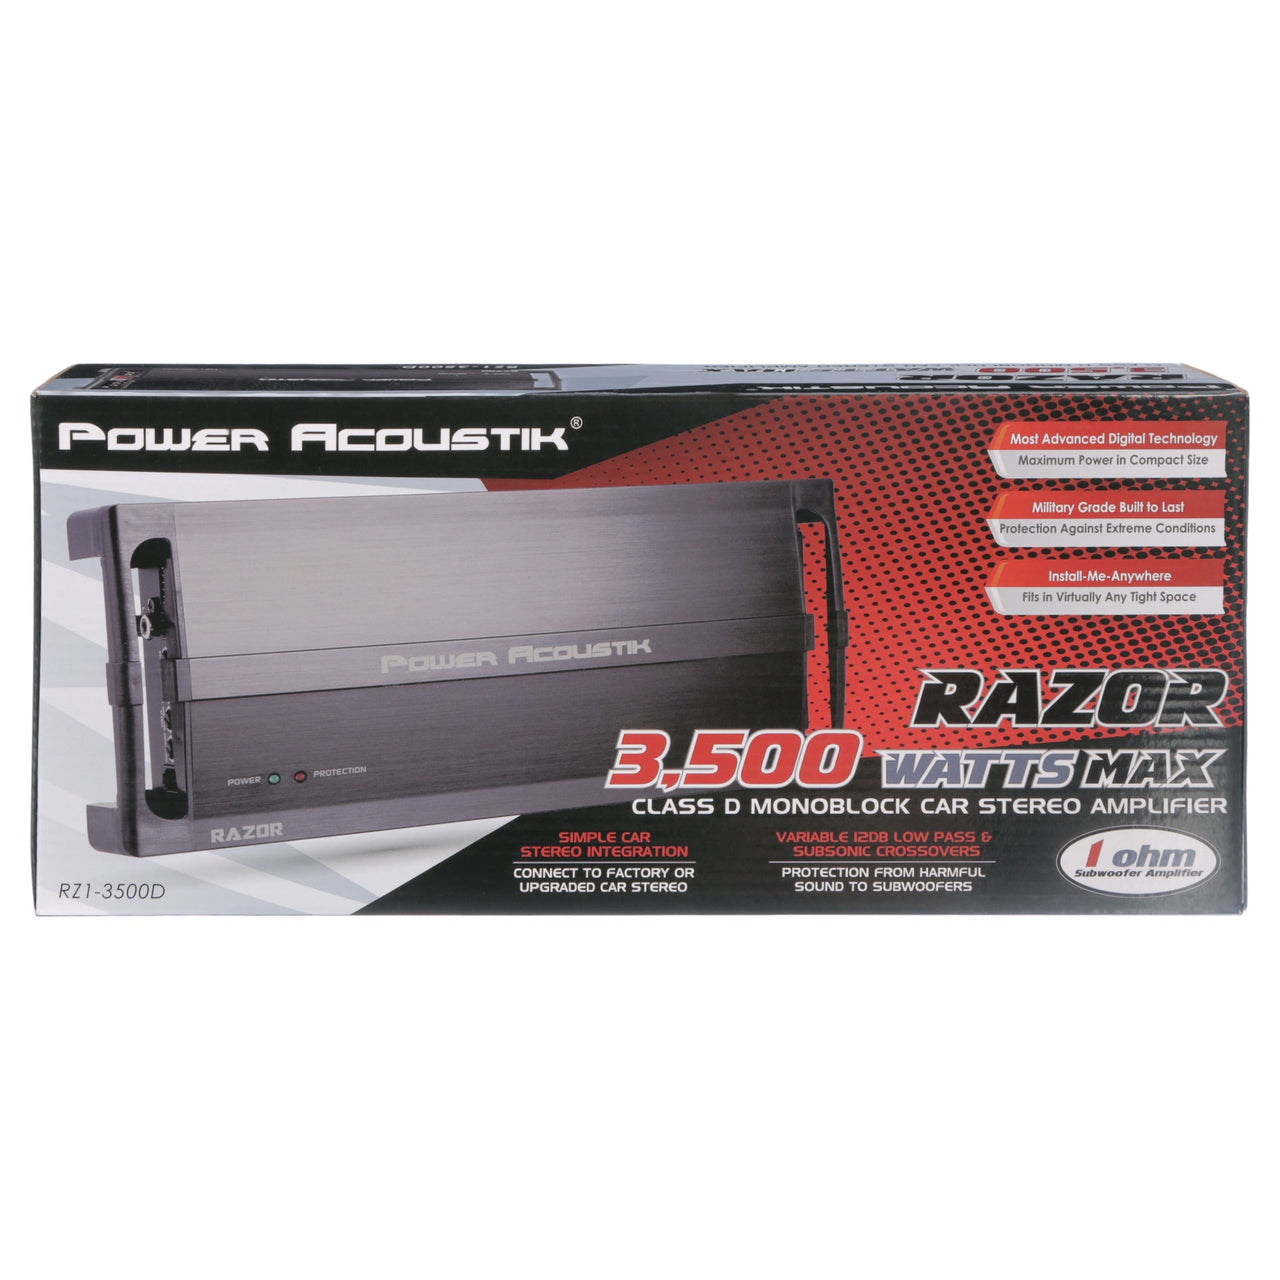 Power Acoustik RZ1-3500D RAZOR Series Monoblock Amplifier + 8 Gauge AMP Kit